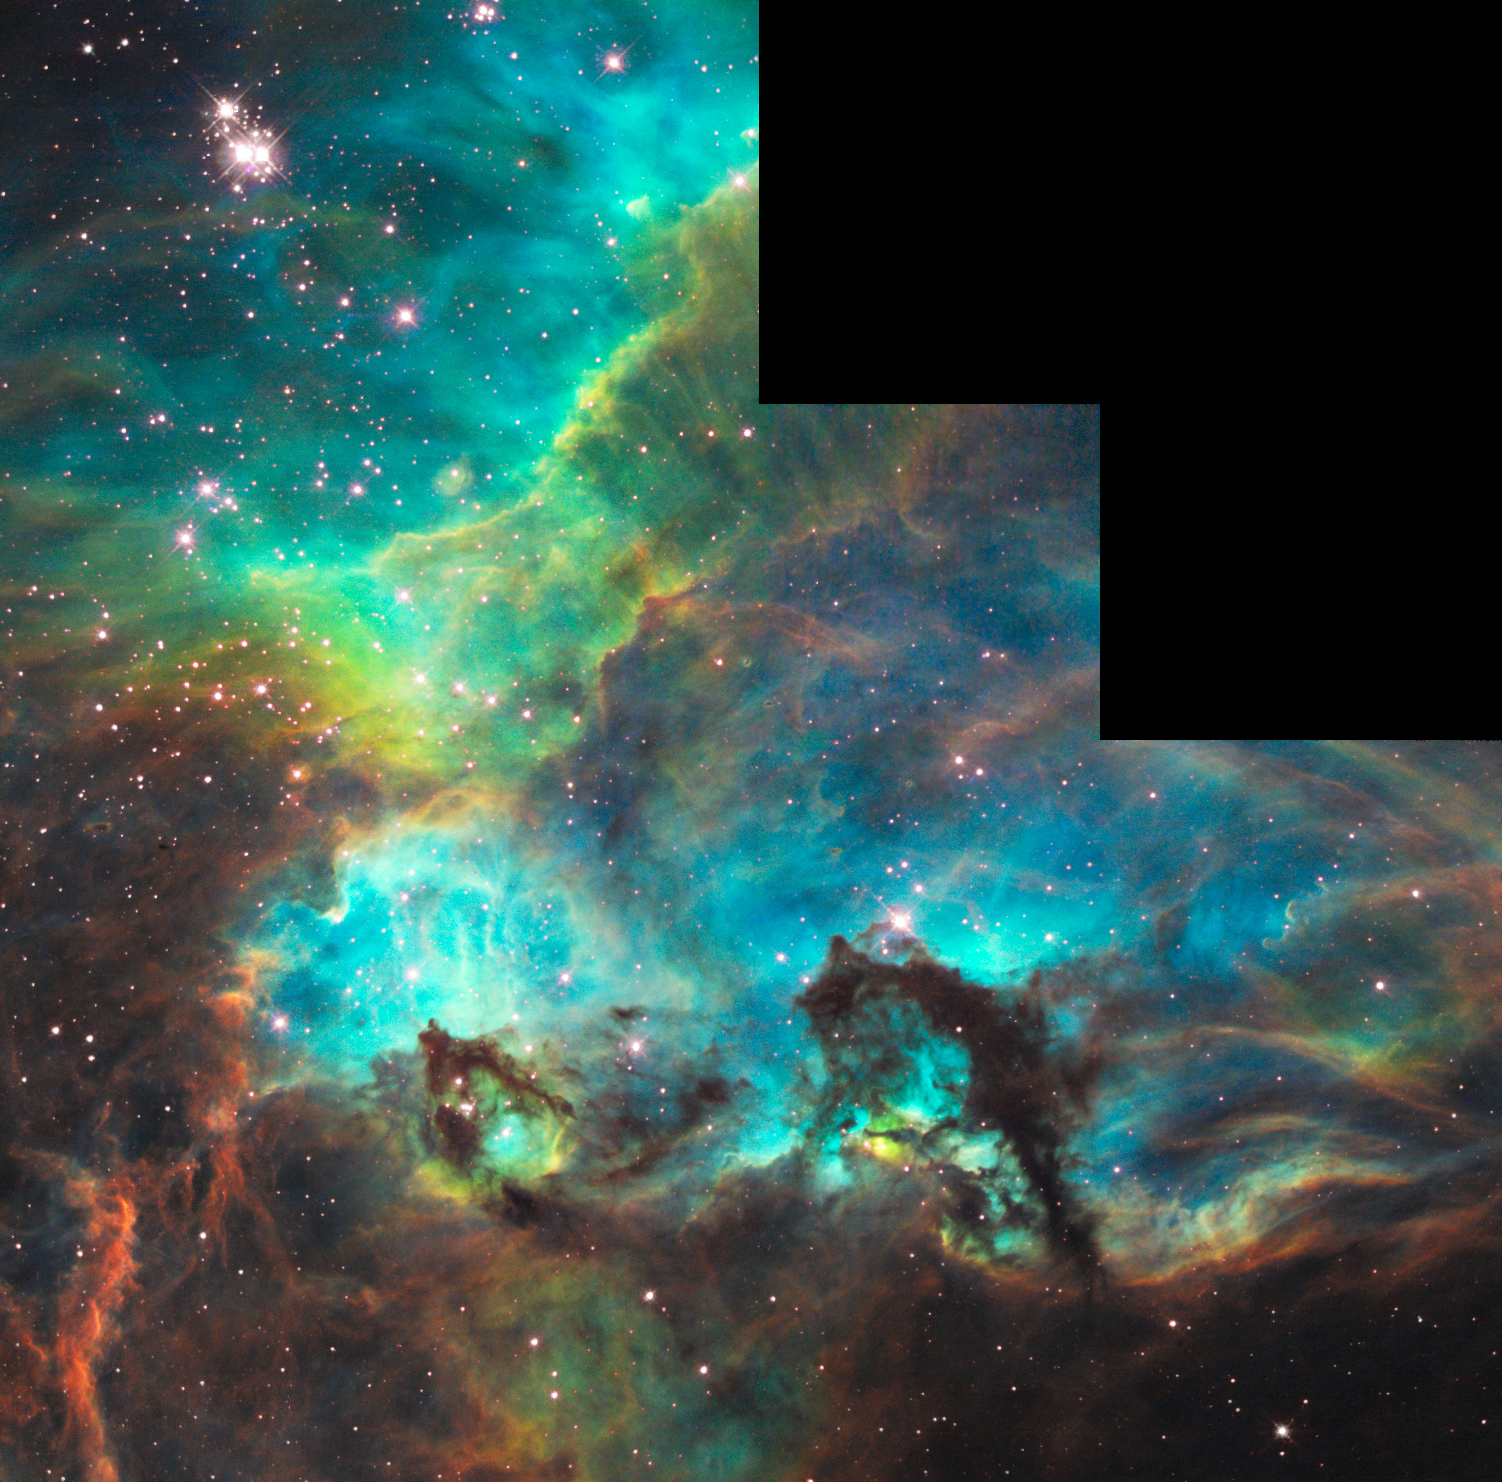 Morskoi konek v Bol'shom Magellanovom Oblake